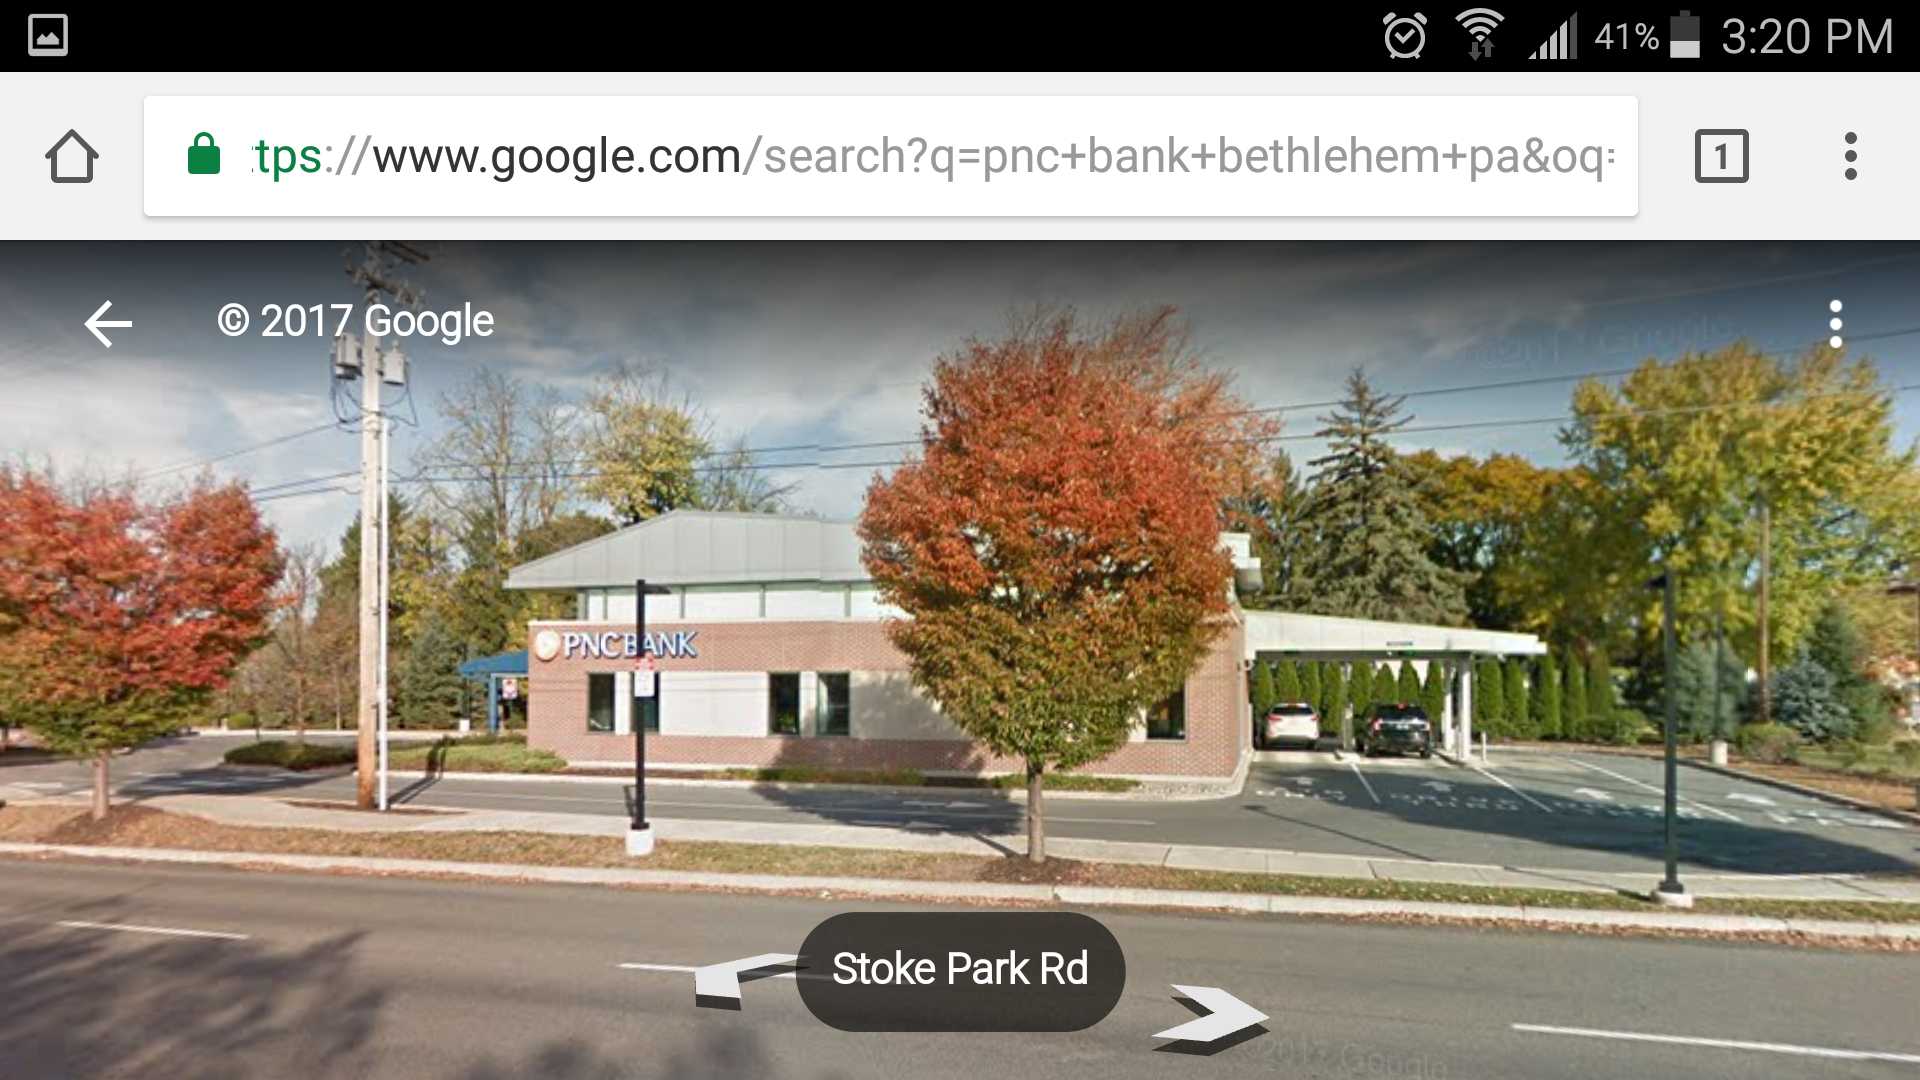 PNC Bank 10 Stoke Park Rd, Bethlehem, PA 18017